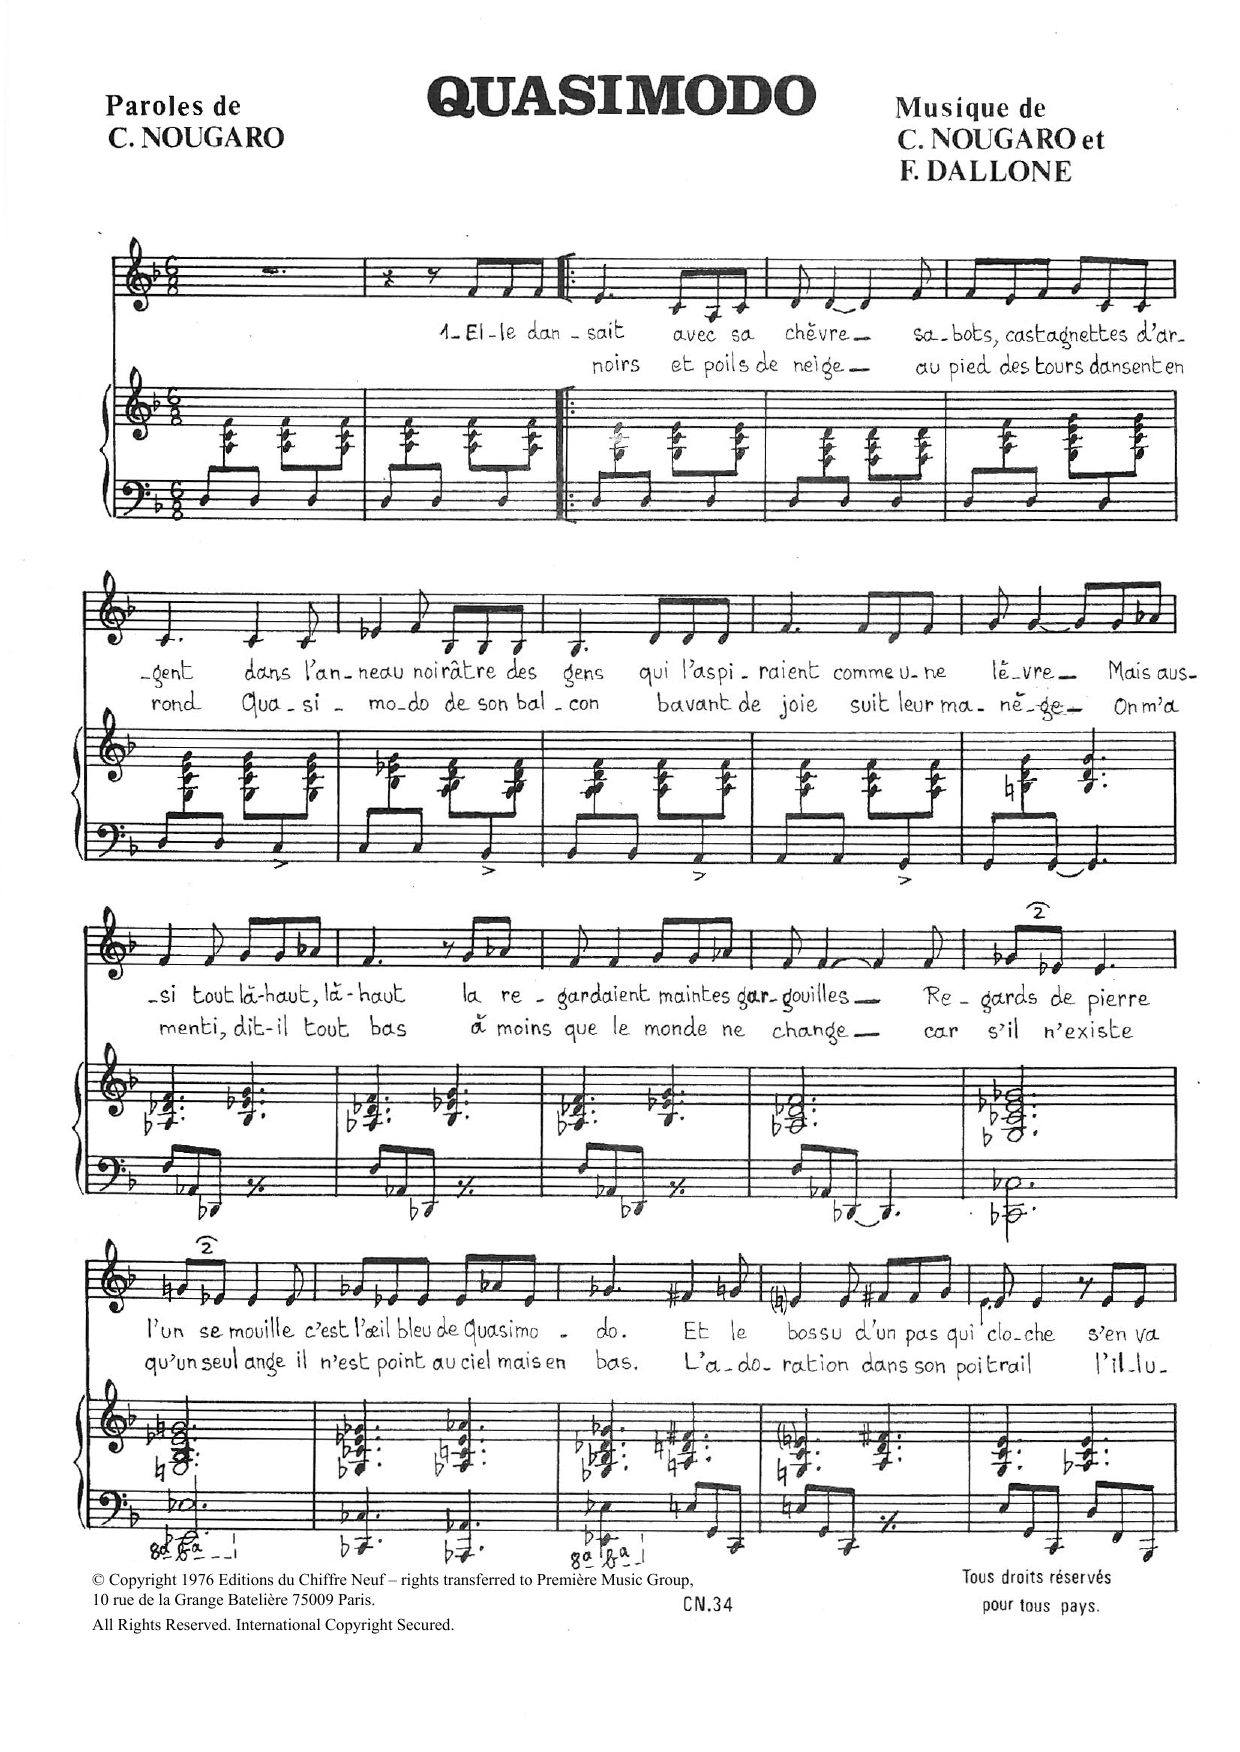 Claude Nougaro Quasimodo Sheet Music Notes & Chords for Piano & Vocal - Download or Print PDF